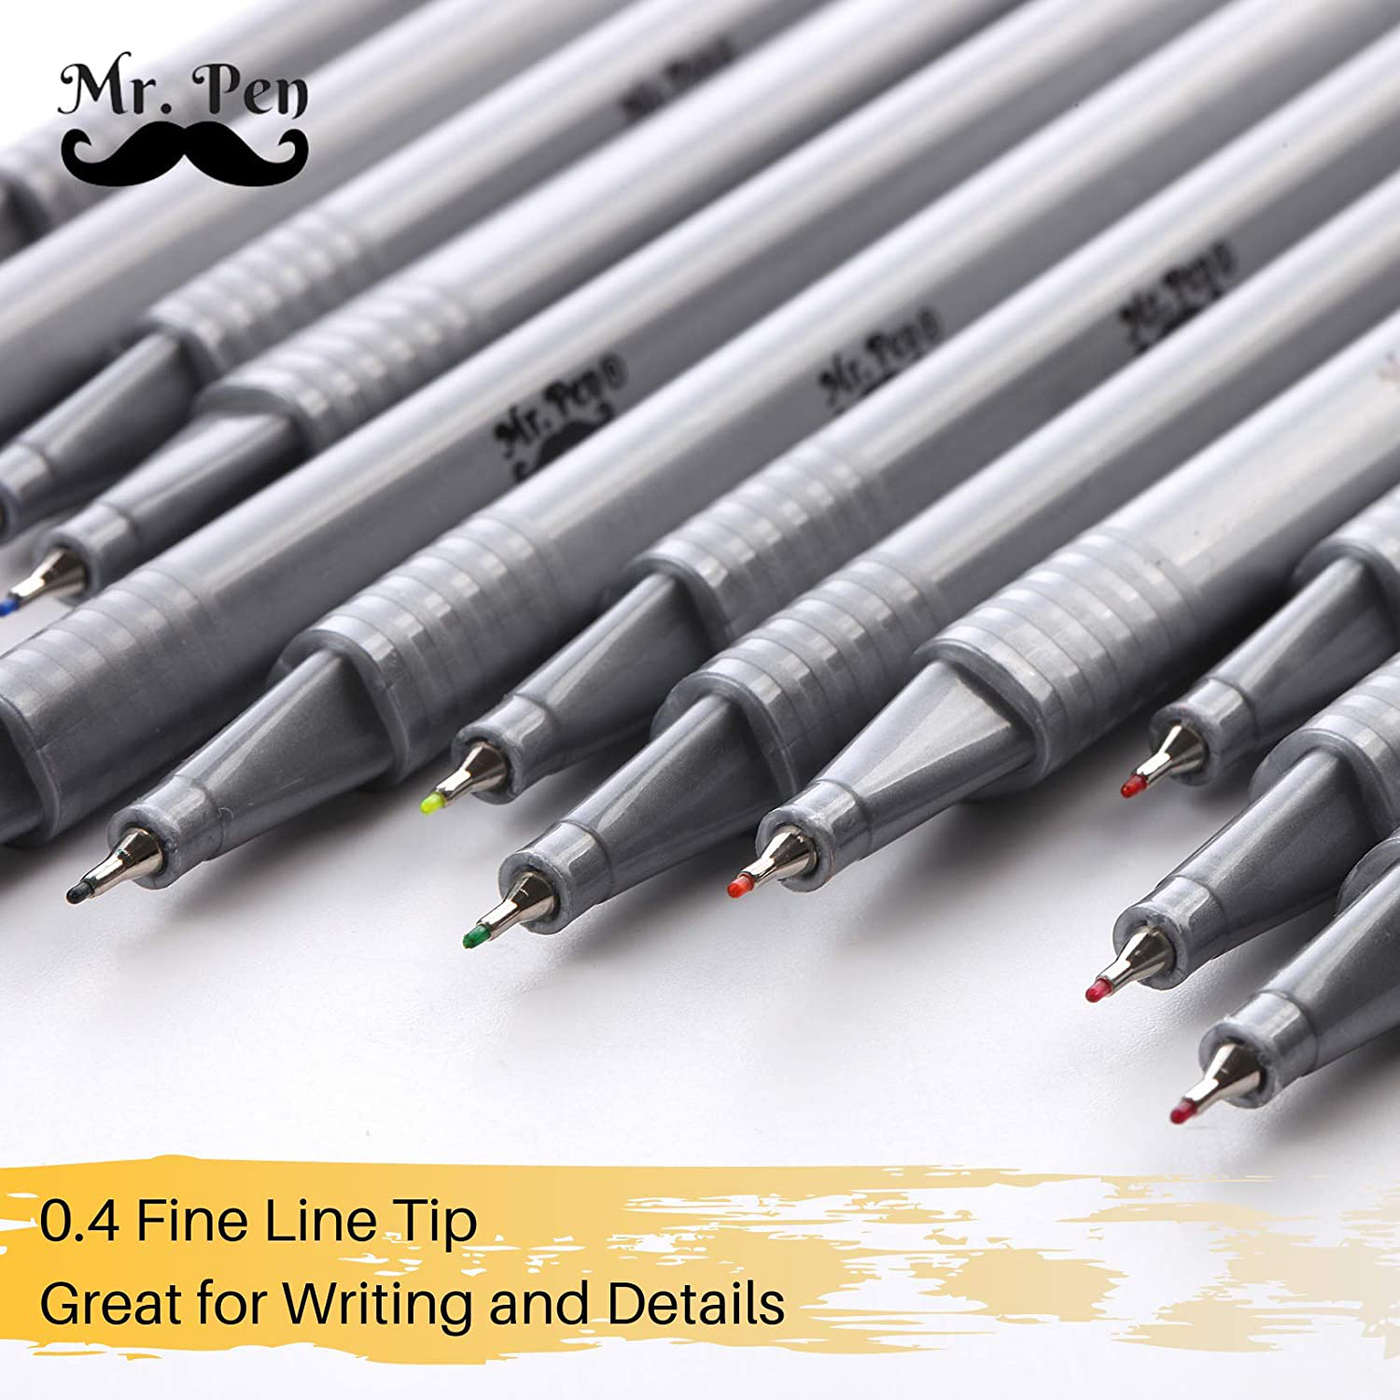 Mr. Pen- Fineliner Pens, 12 Pack, Pens Fine Point, Colored Pens, Journal Pens, Bible Journaling Pens, Journals Supplies, School Supplies, Pen Set, Art Pens, Writing Pens, Fine Tip Markers, Bible Pens